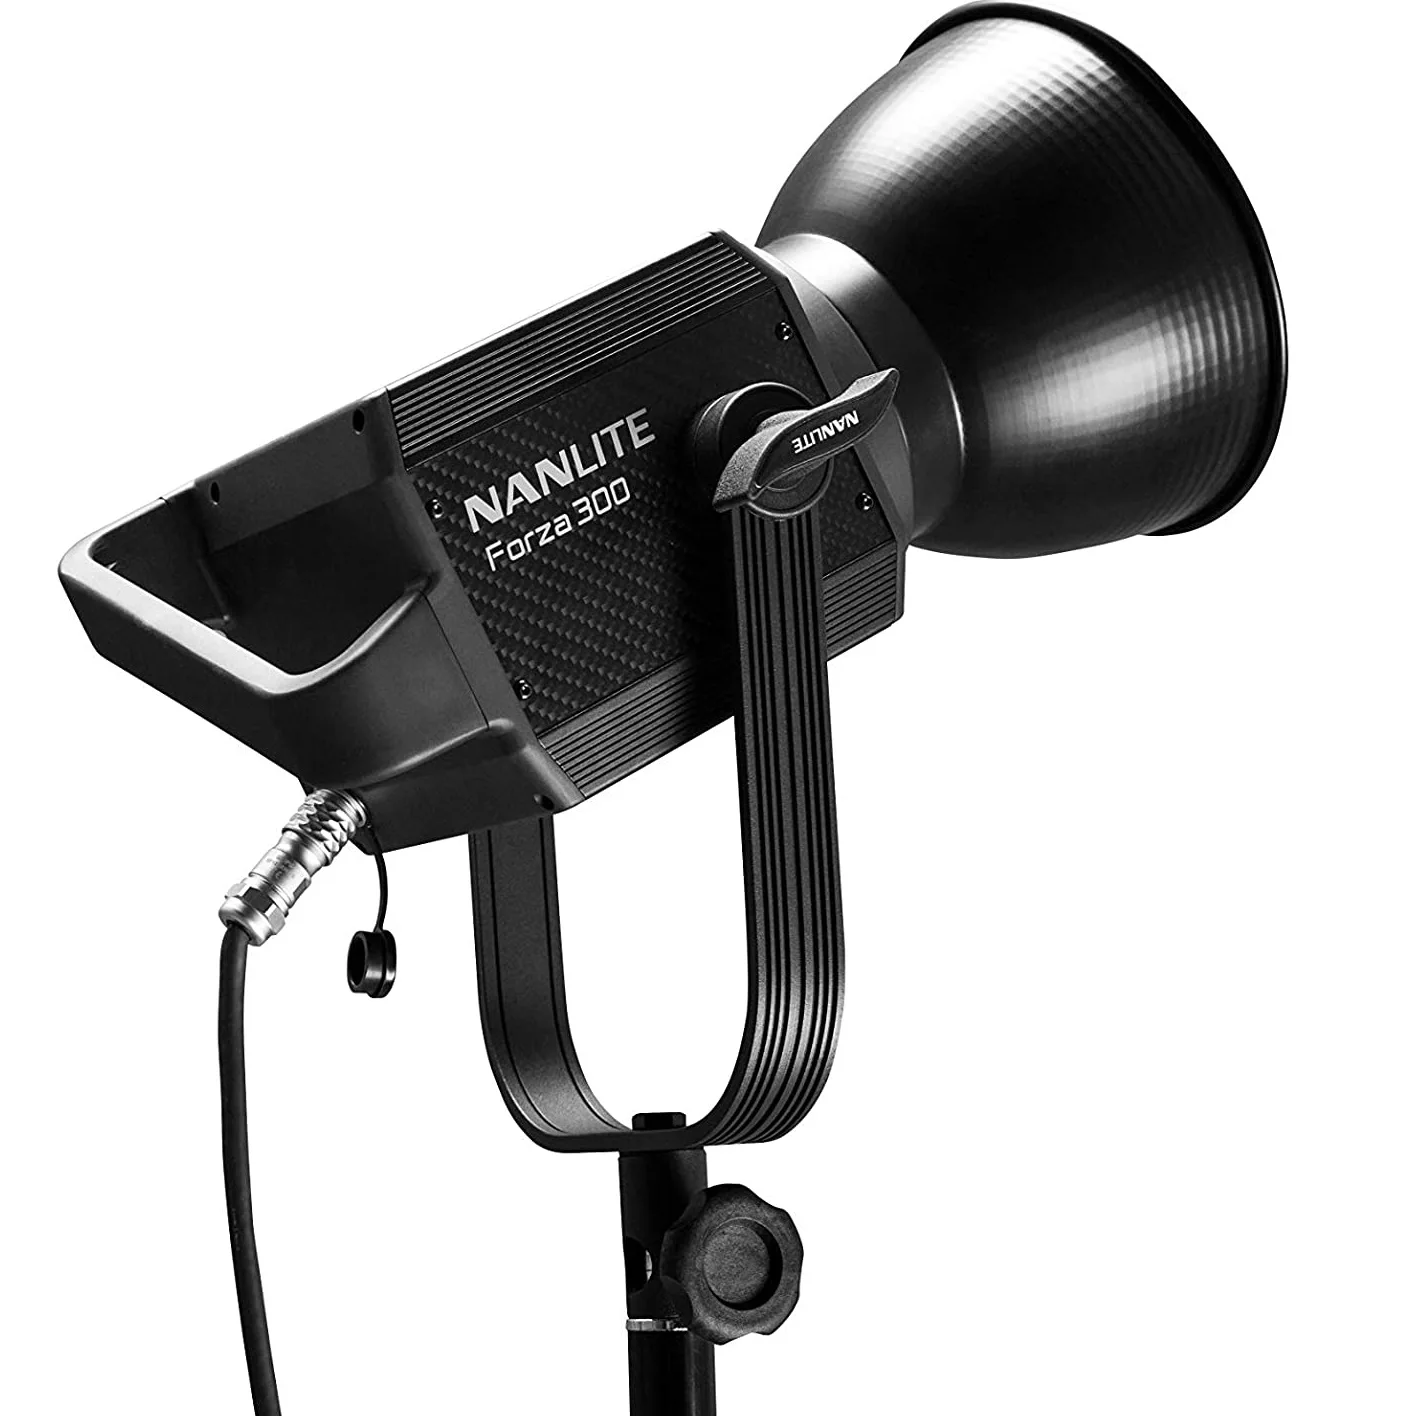 

Nanlite Forza 300 LED Monolight COB LED Photographic Lighting 300w 5600K CRI 98 TLCI 95 Is Used for Outdoor Shooting